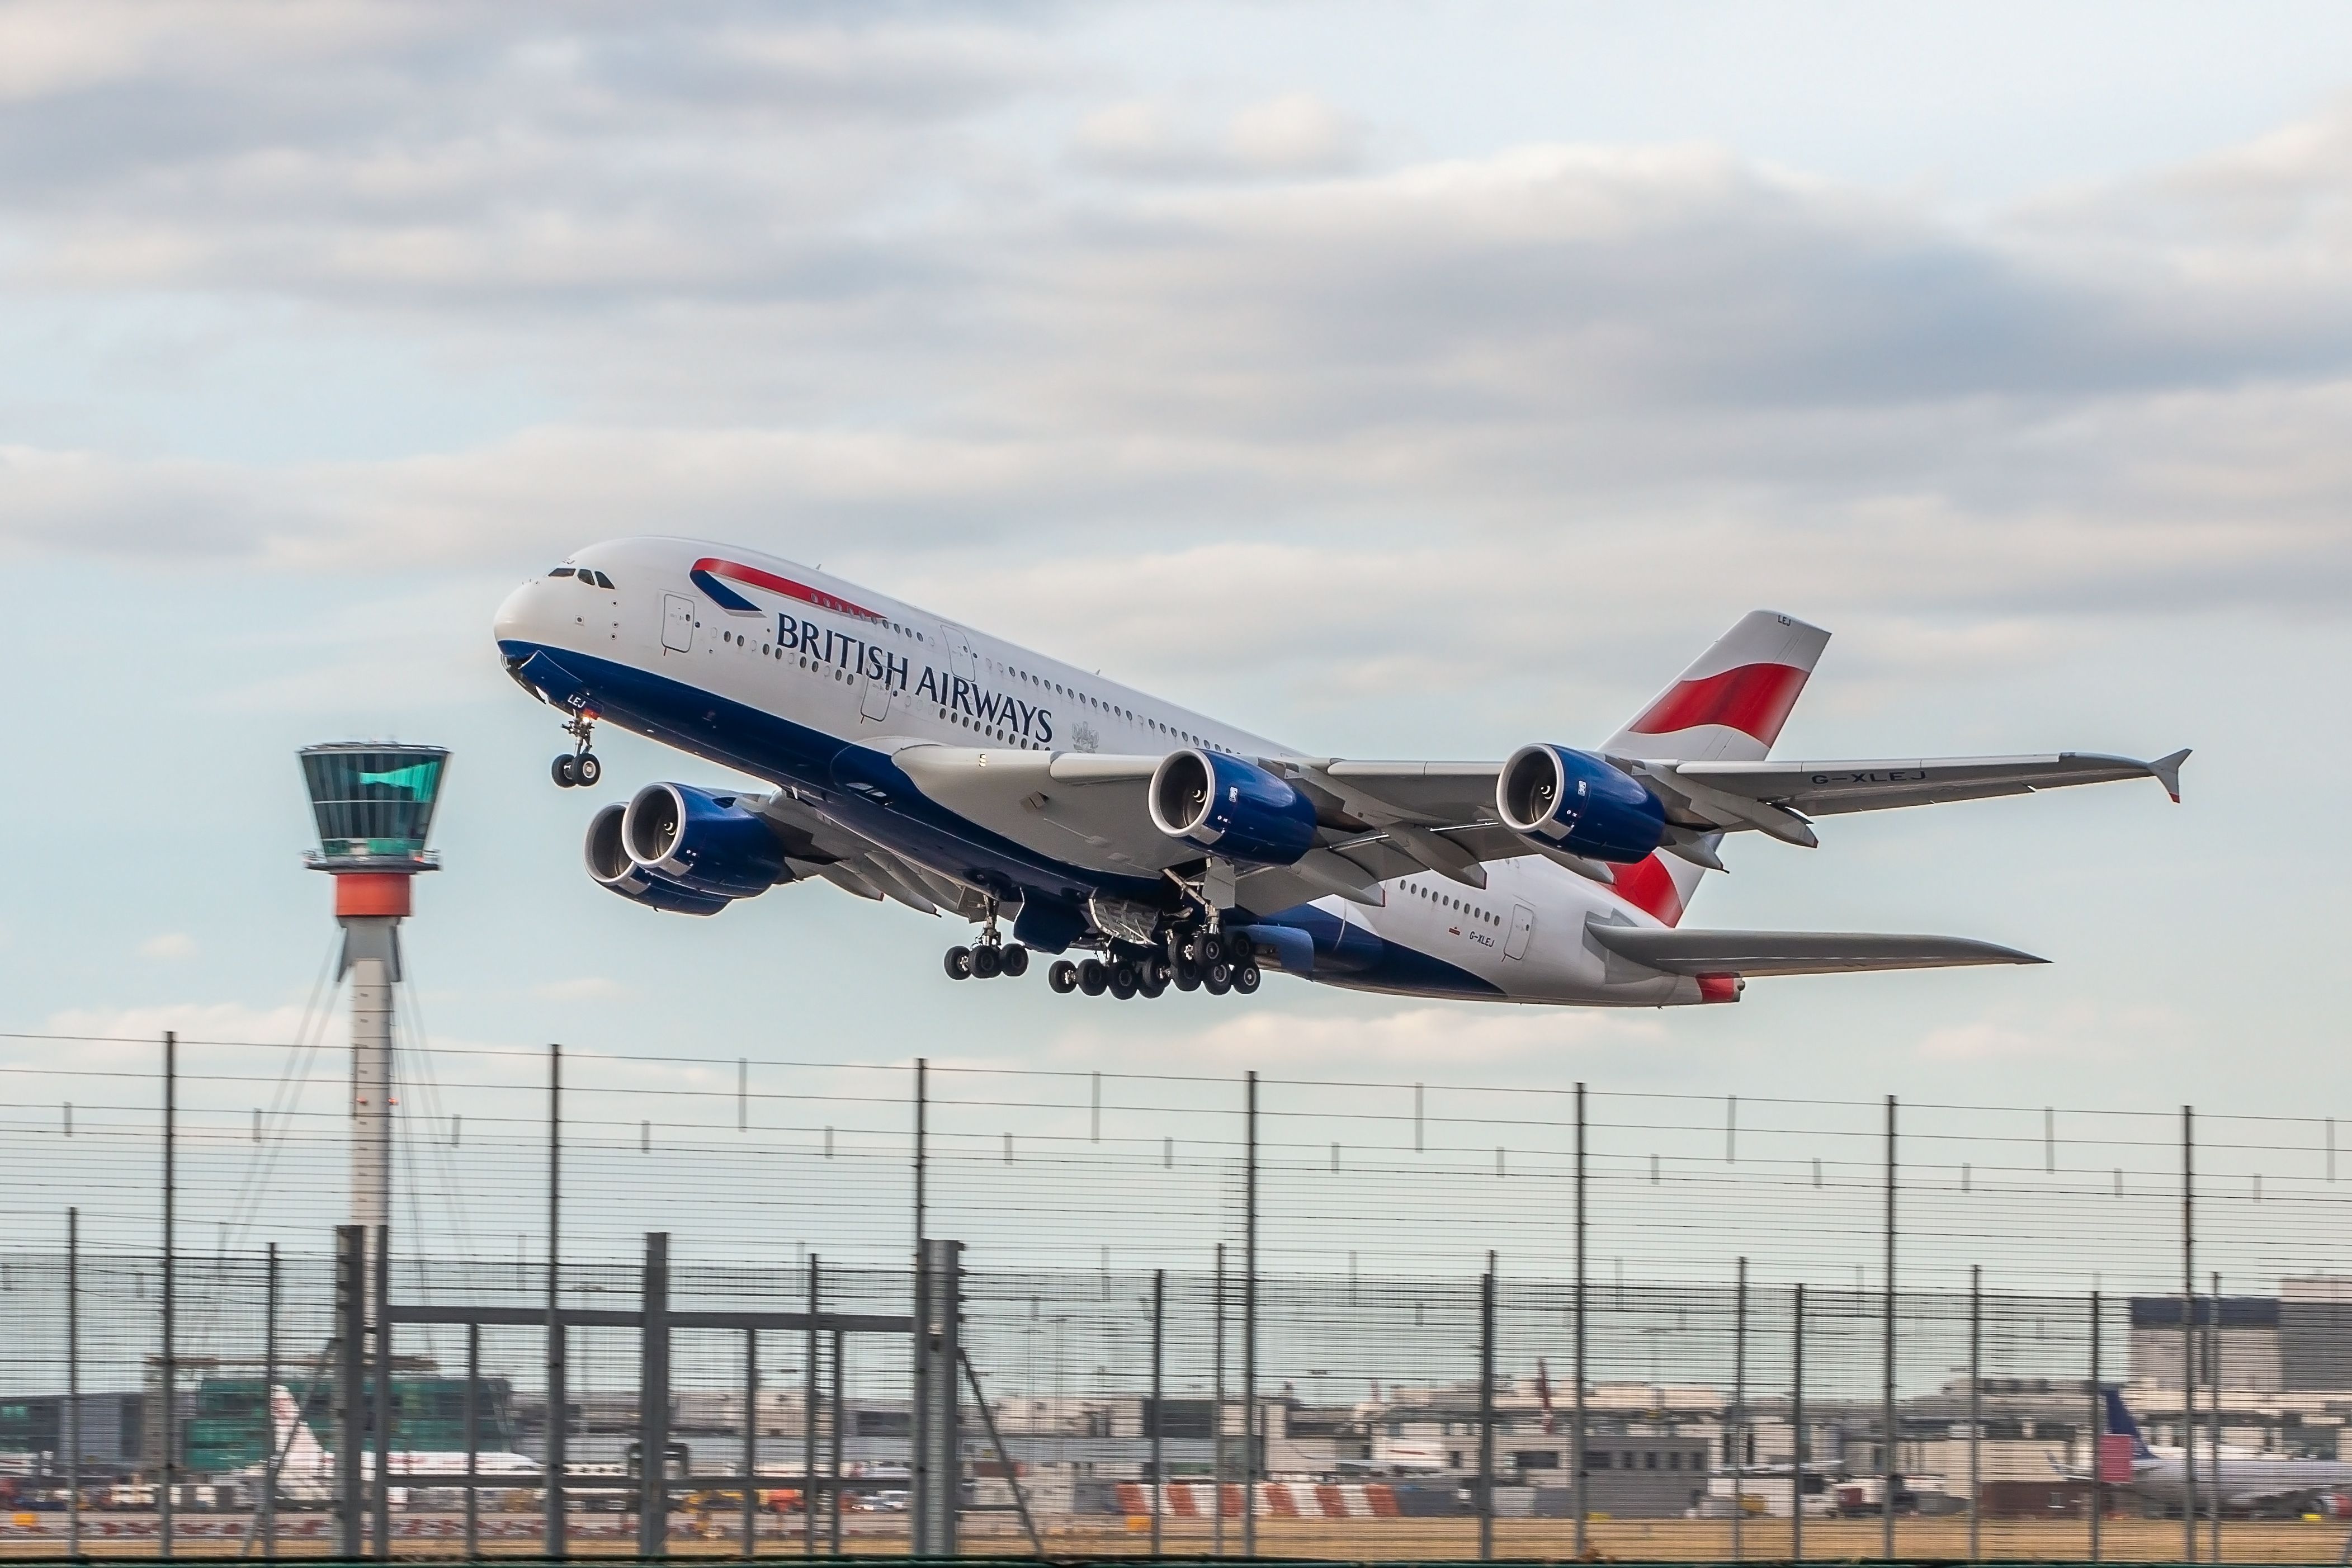 British Airways Airbus A380 taking off at London Heathrow Airport